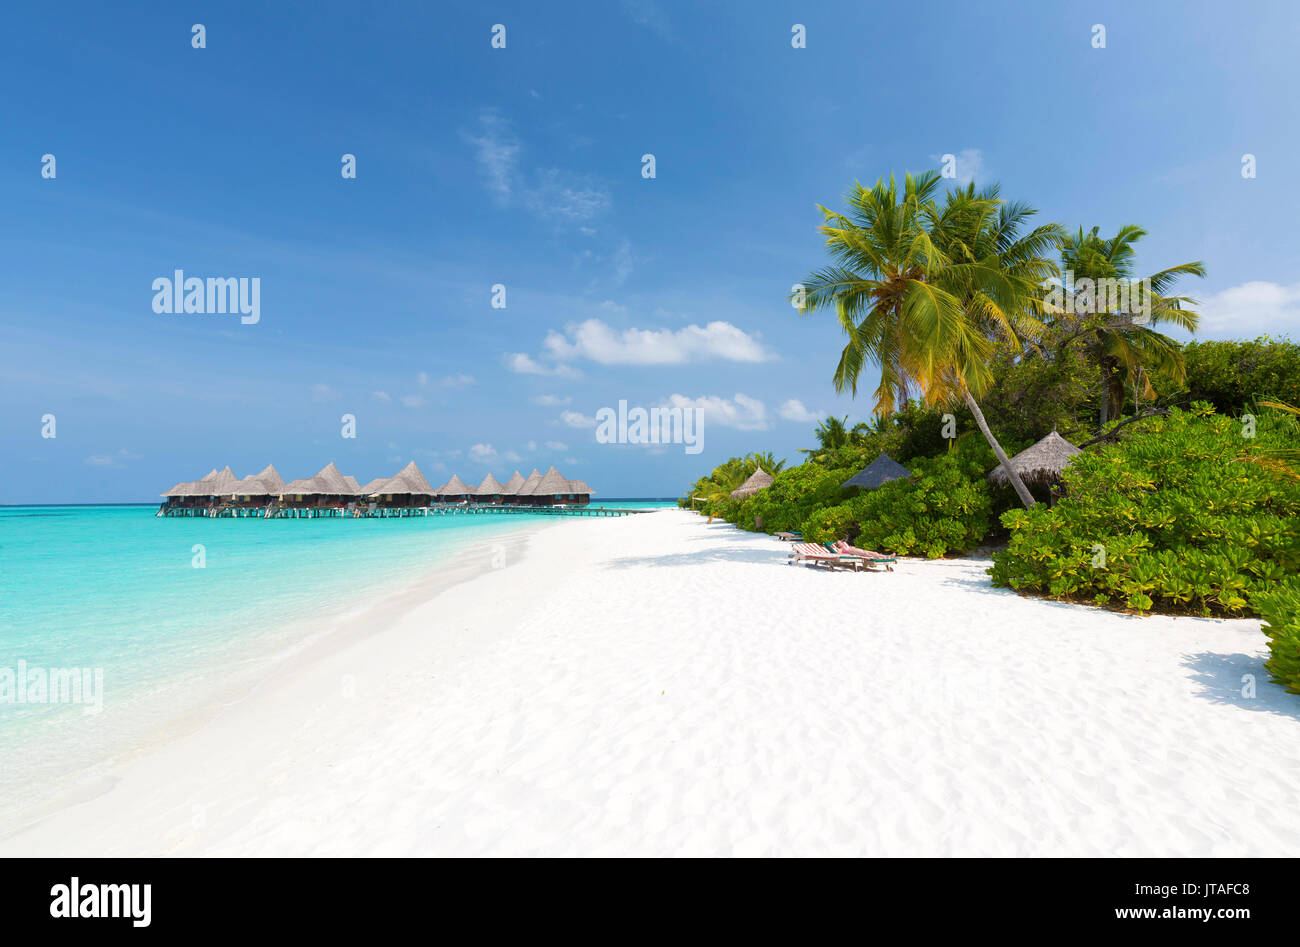 Blick entlang tropischer Strand in Richtung über dem Wasser Villen, Coco Palm Dhuni Kolhu Resort, Baa Atoll, Malediven Stockfoto